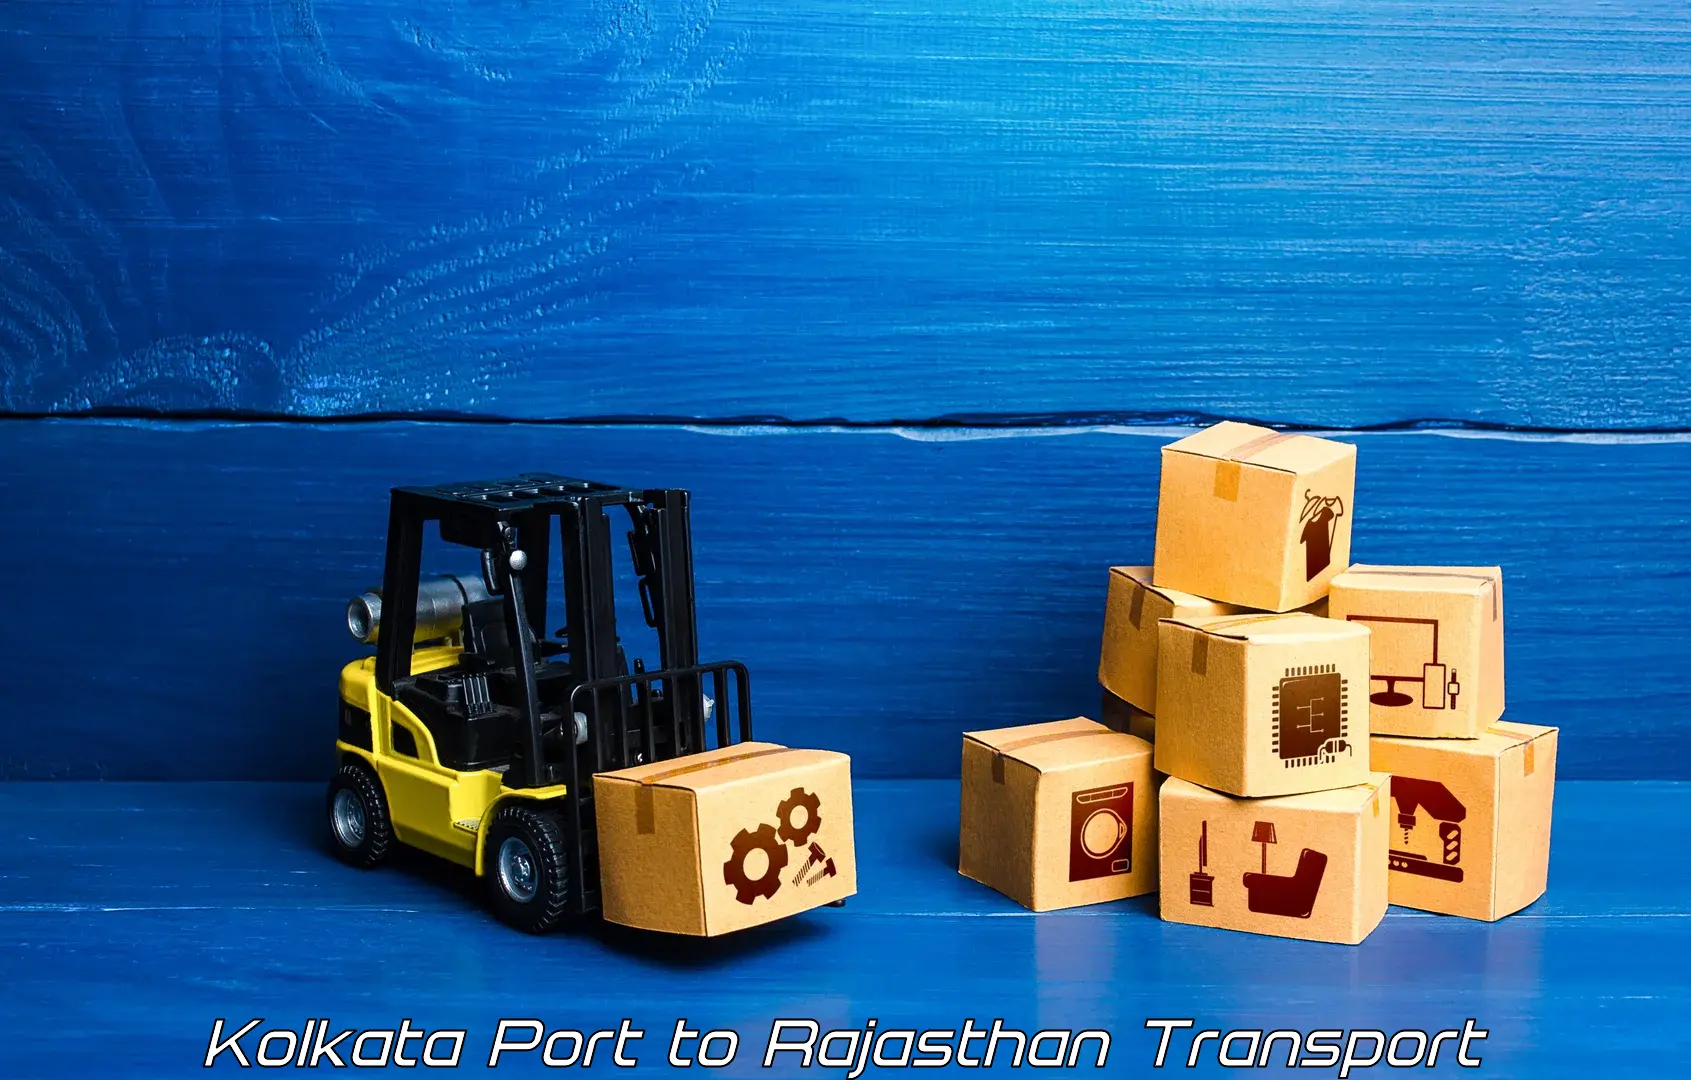 Goods delivery service Kolkata Port to Udaipur